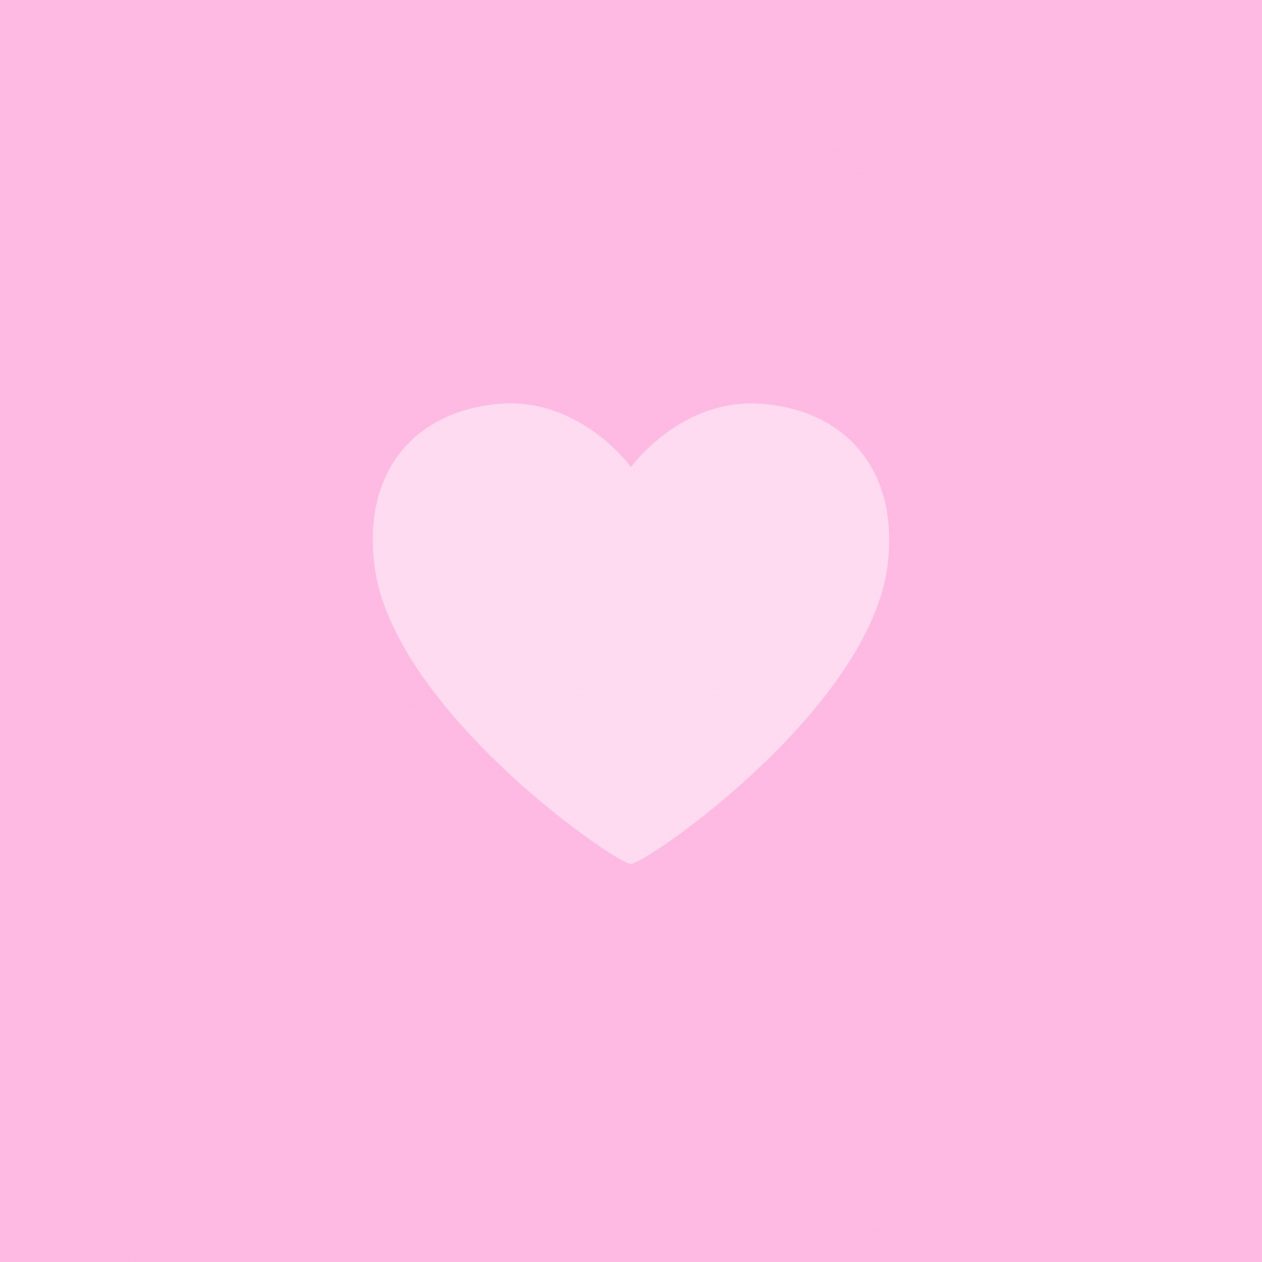 1262x1262 Parallax wallpaper 4k Love Heart Pink Background iPad Wallpaper 1262x1262 pixels resolution